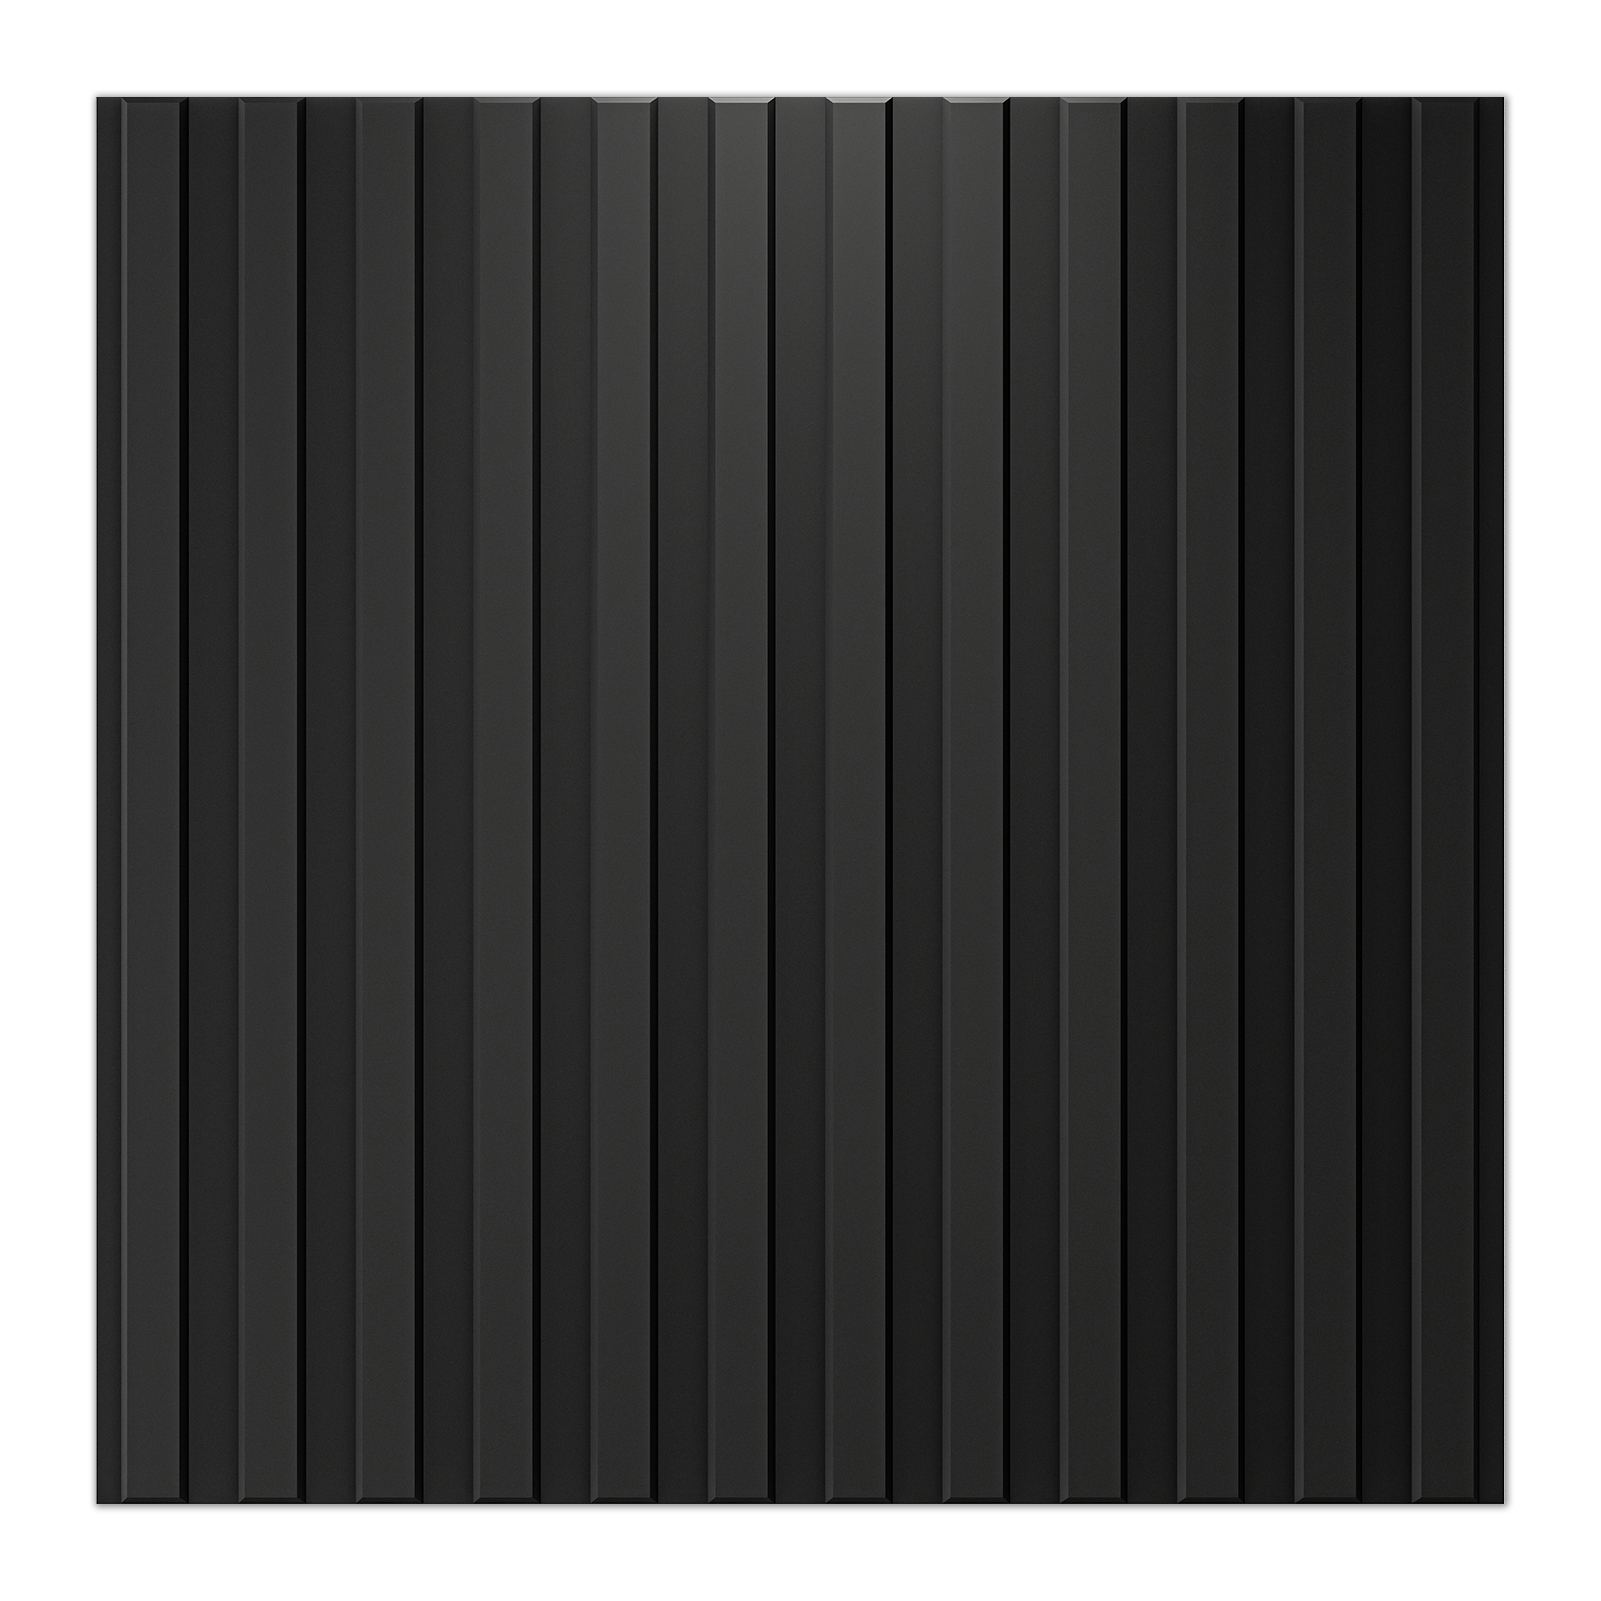 A10064BK-Art3d Slat Wall Panel, 3D Fluted Textured Panel 12-Tile 19.7 x 19.7in.